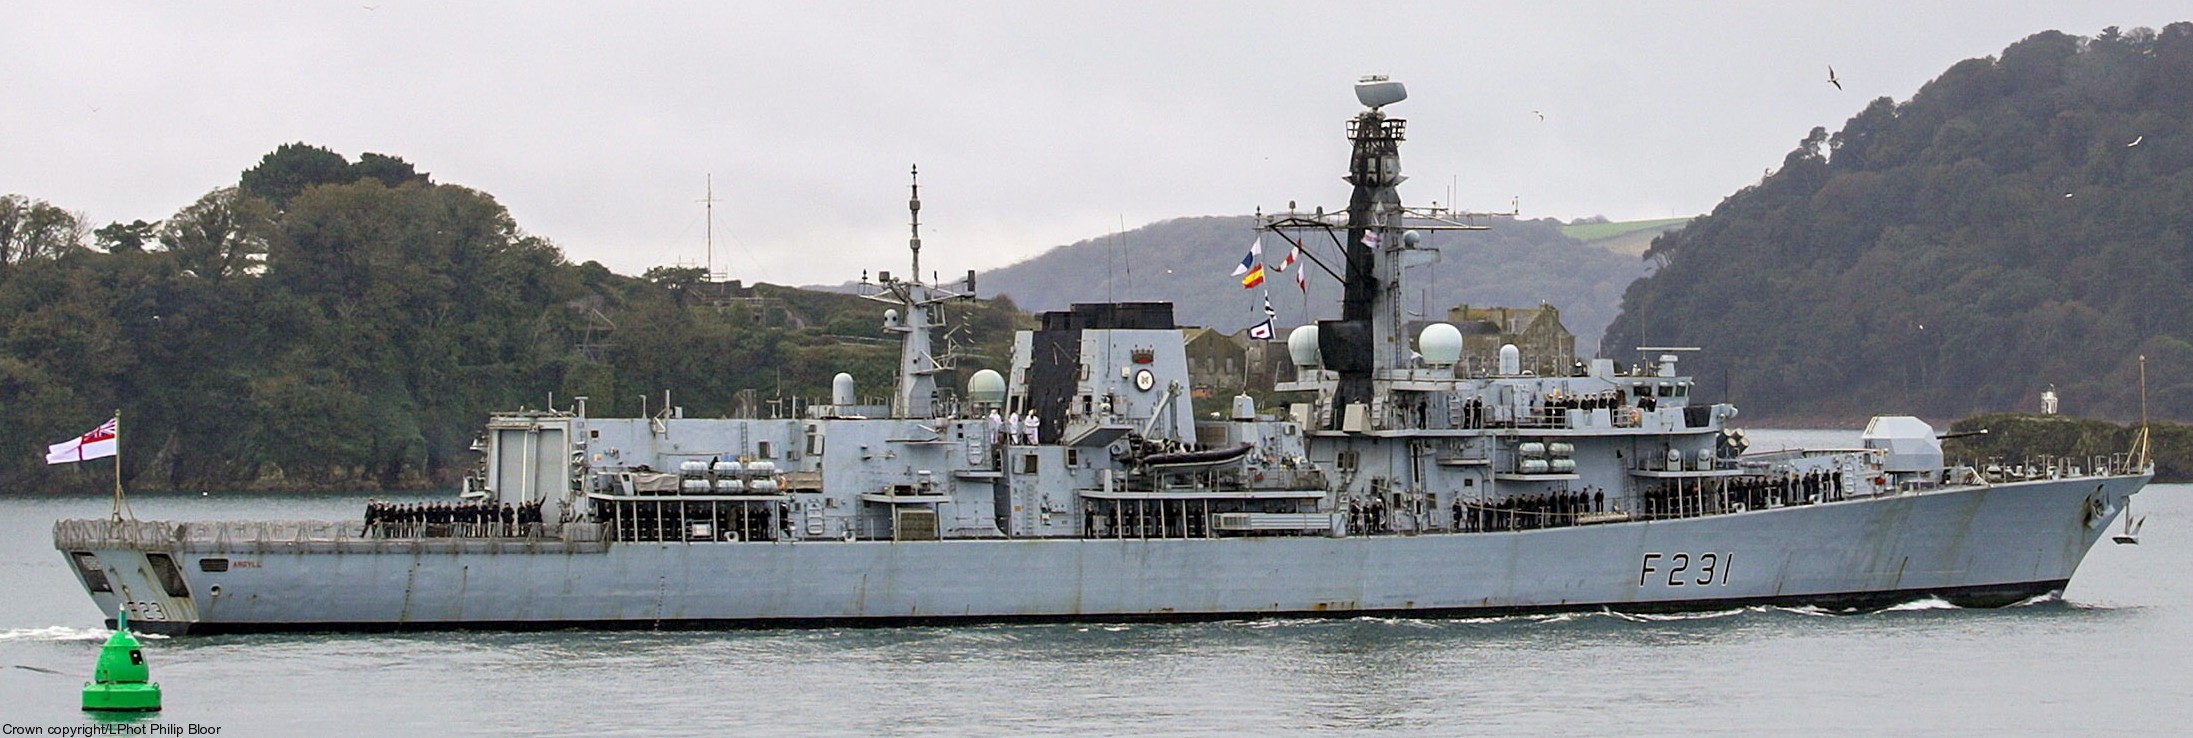 f-231 hms argyll type 23 duke class guided missile frigate ffg royal navy 53